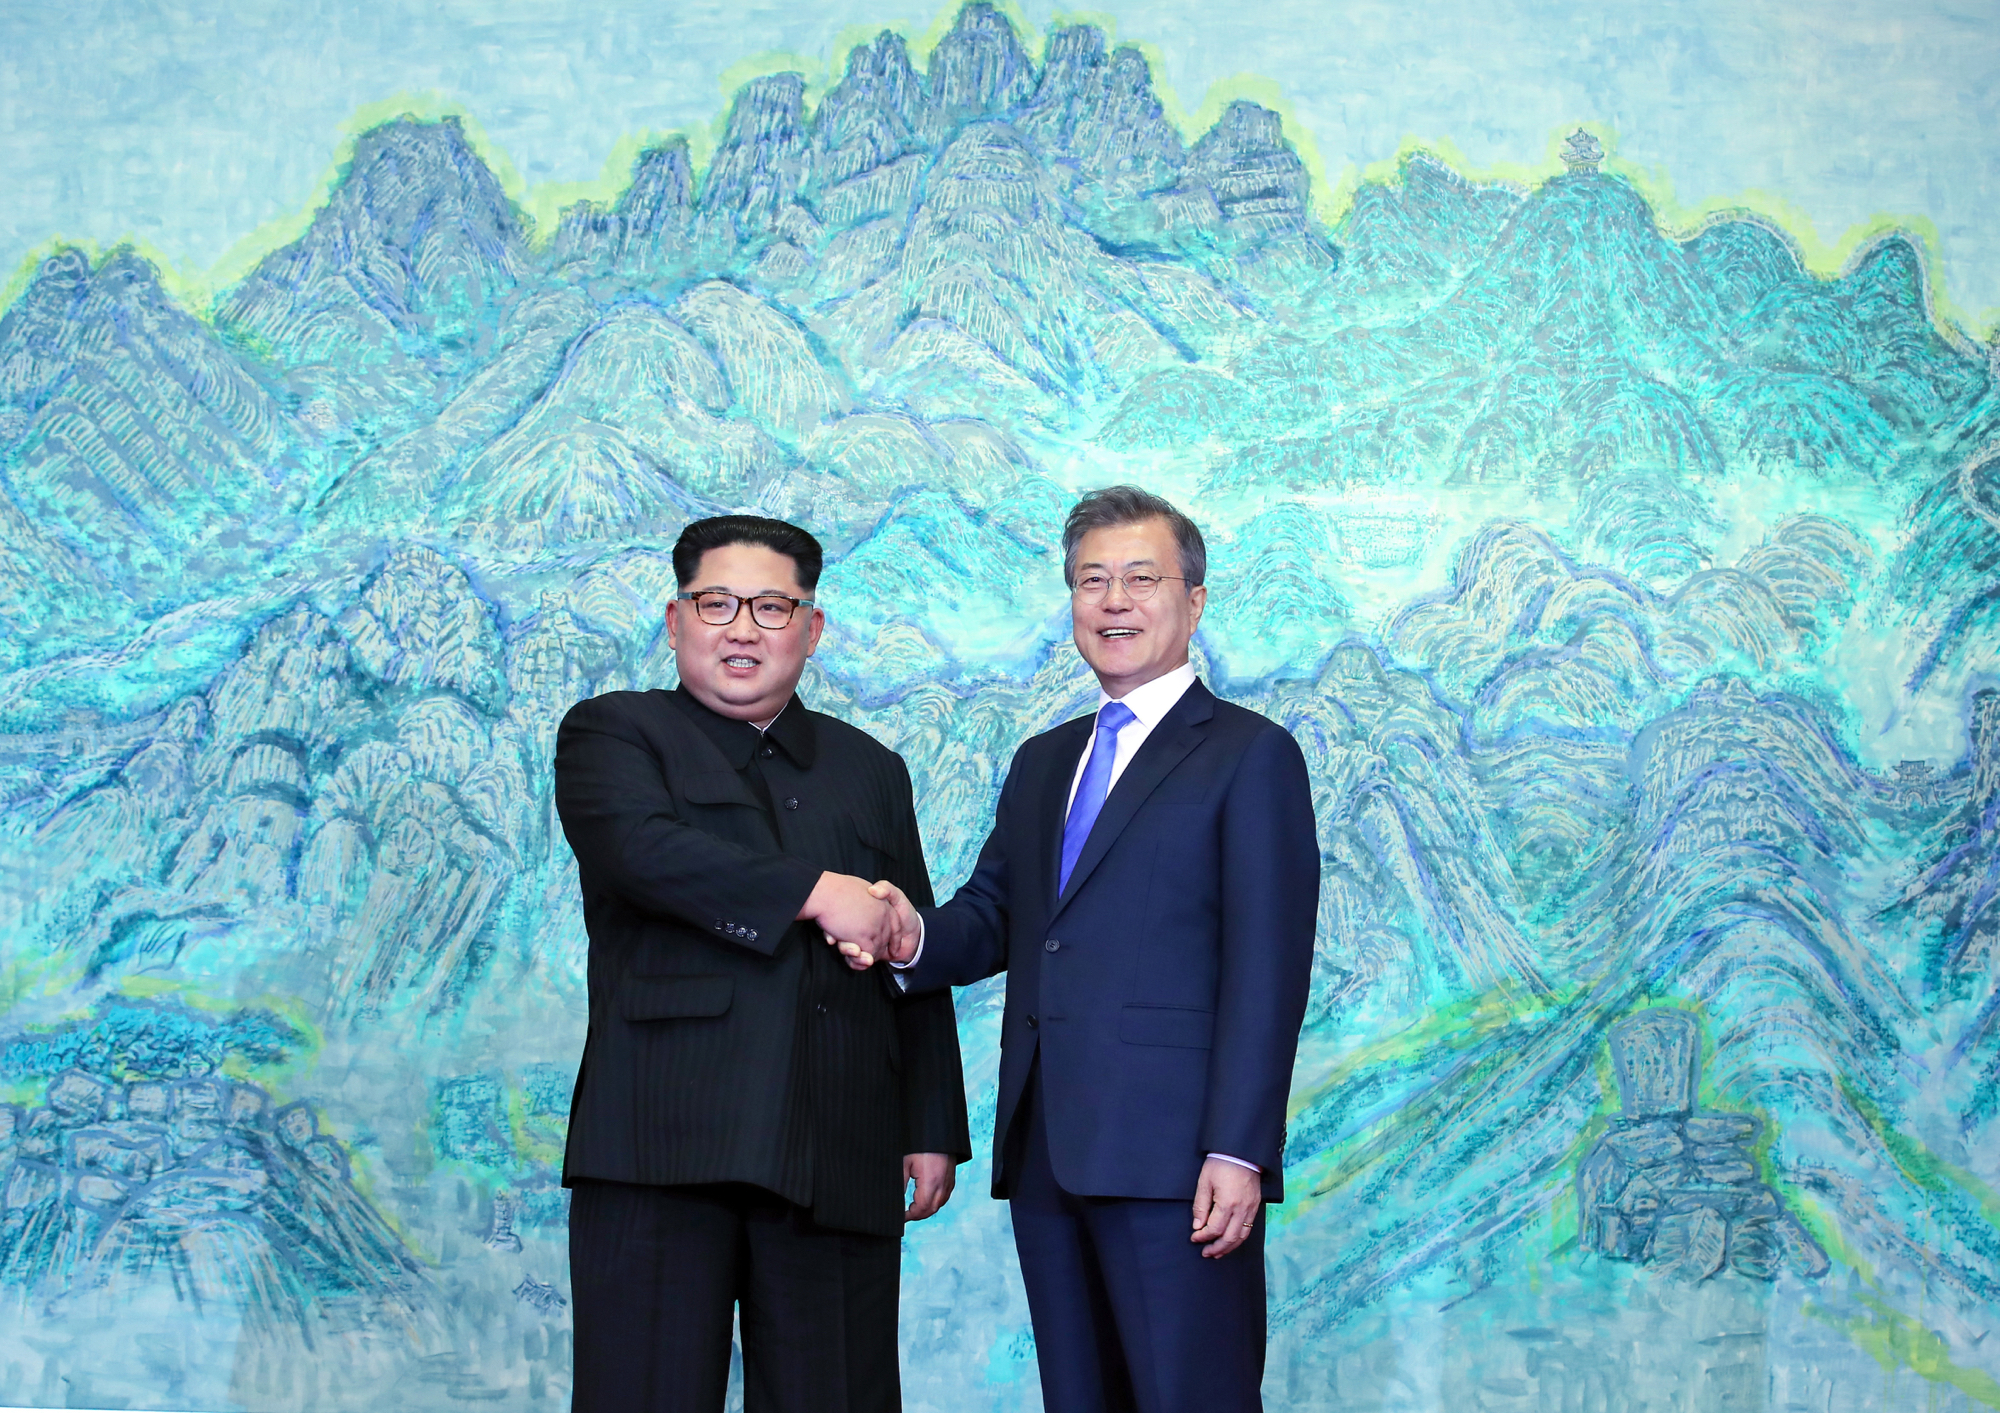 Pope praises Korean leaders' promise to make peninsula nuclear-free